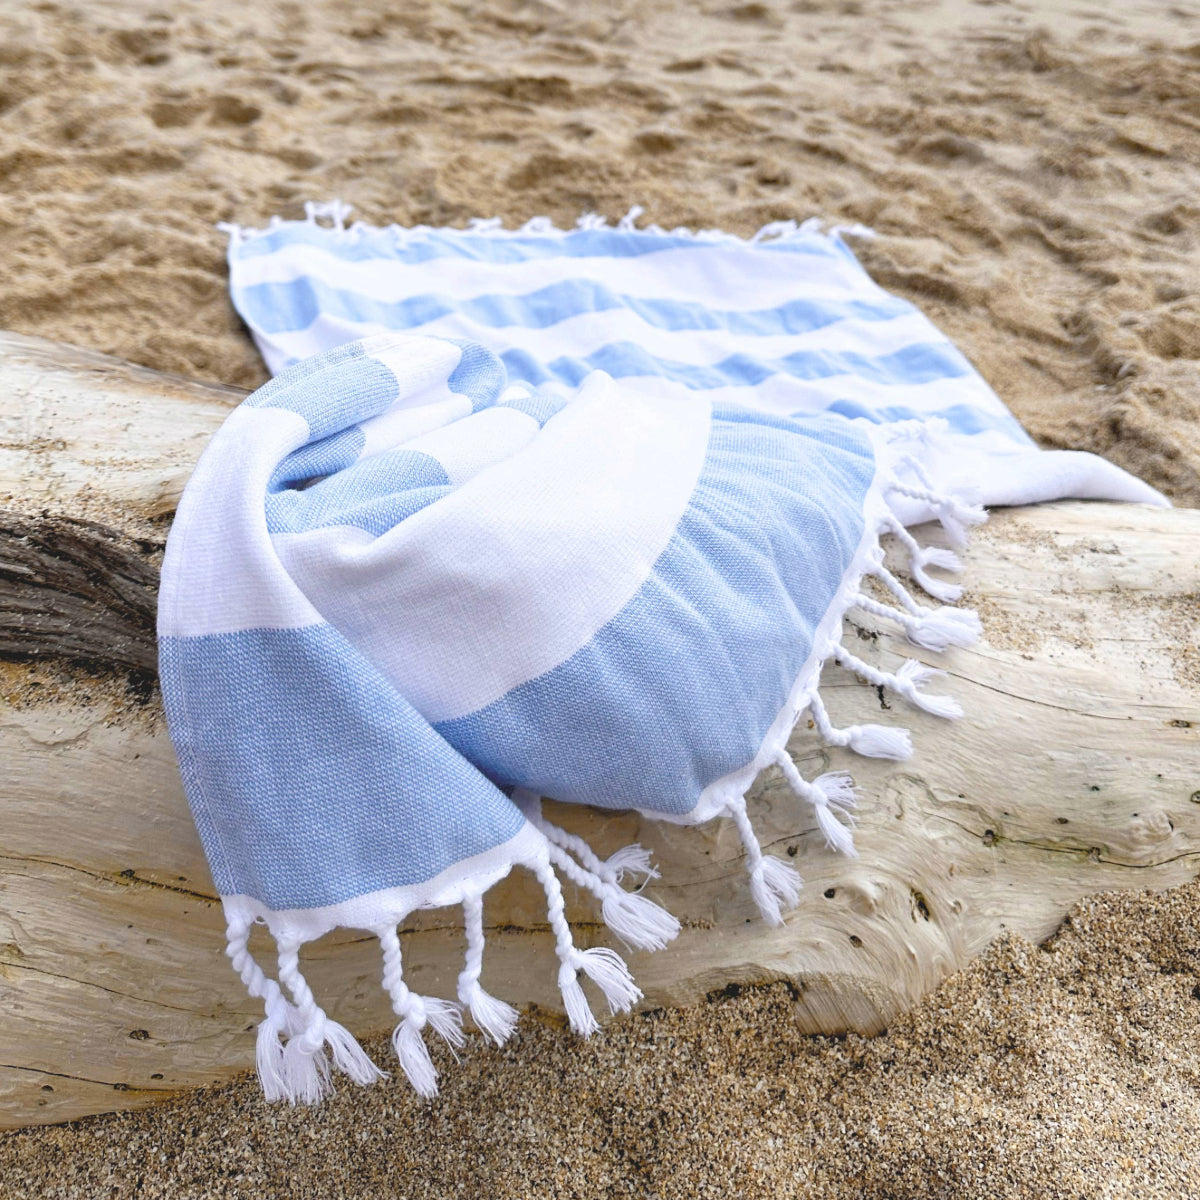 Cabana Striped Beach Towels in Turkish Hammam style.